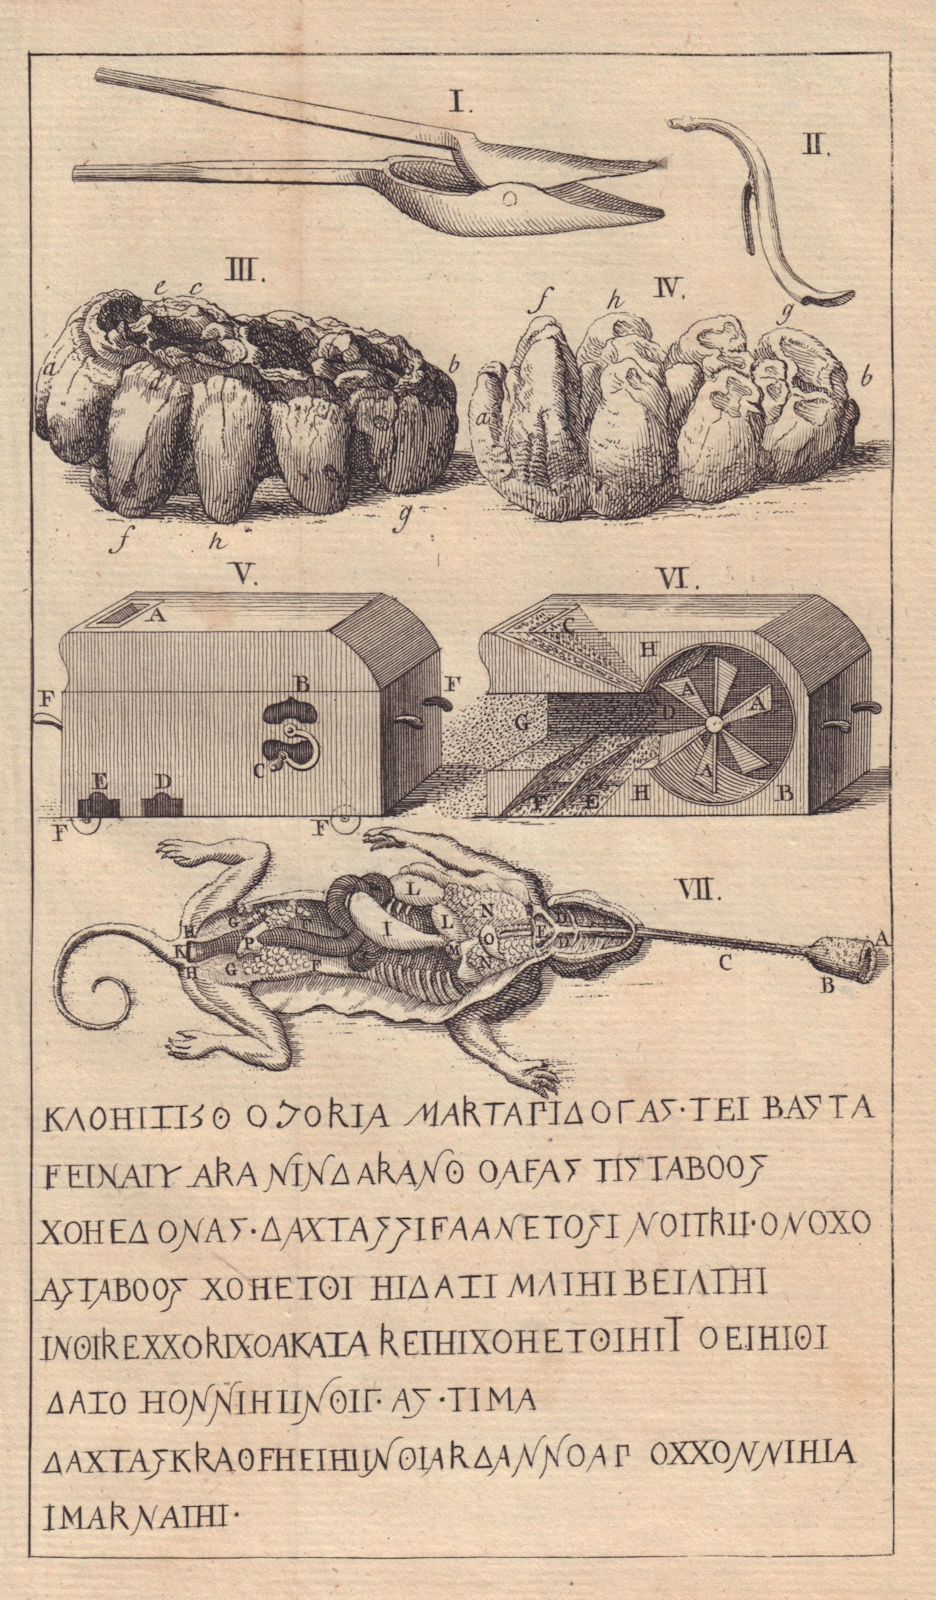 Drenching-spoon. Fossil Tooth. Silesian corn fan. Chameleon Messapian Oelic 1747